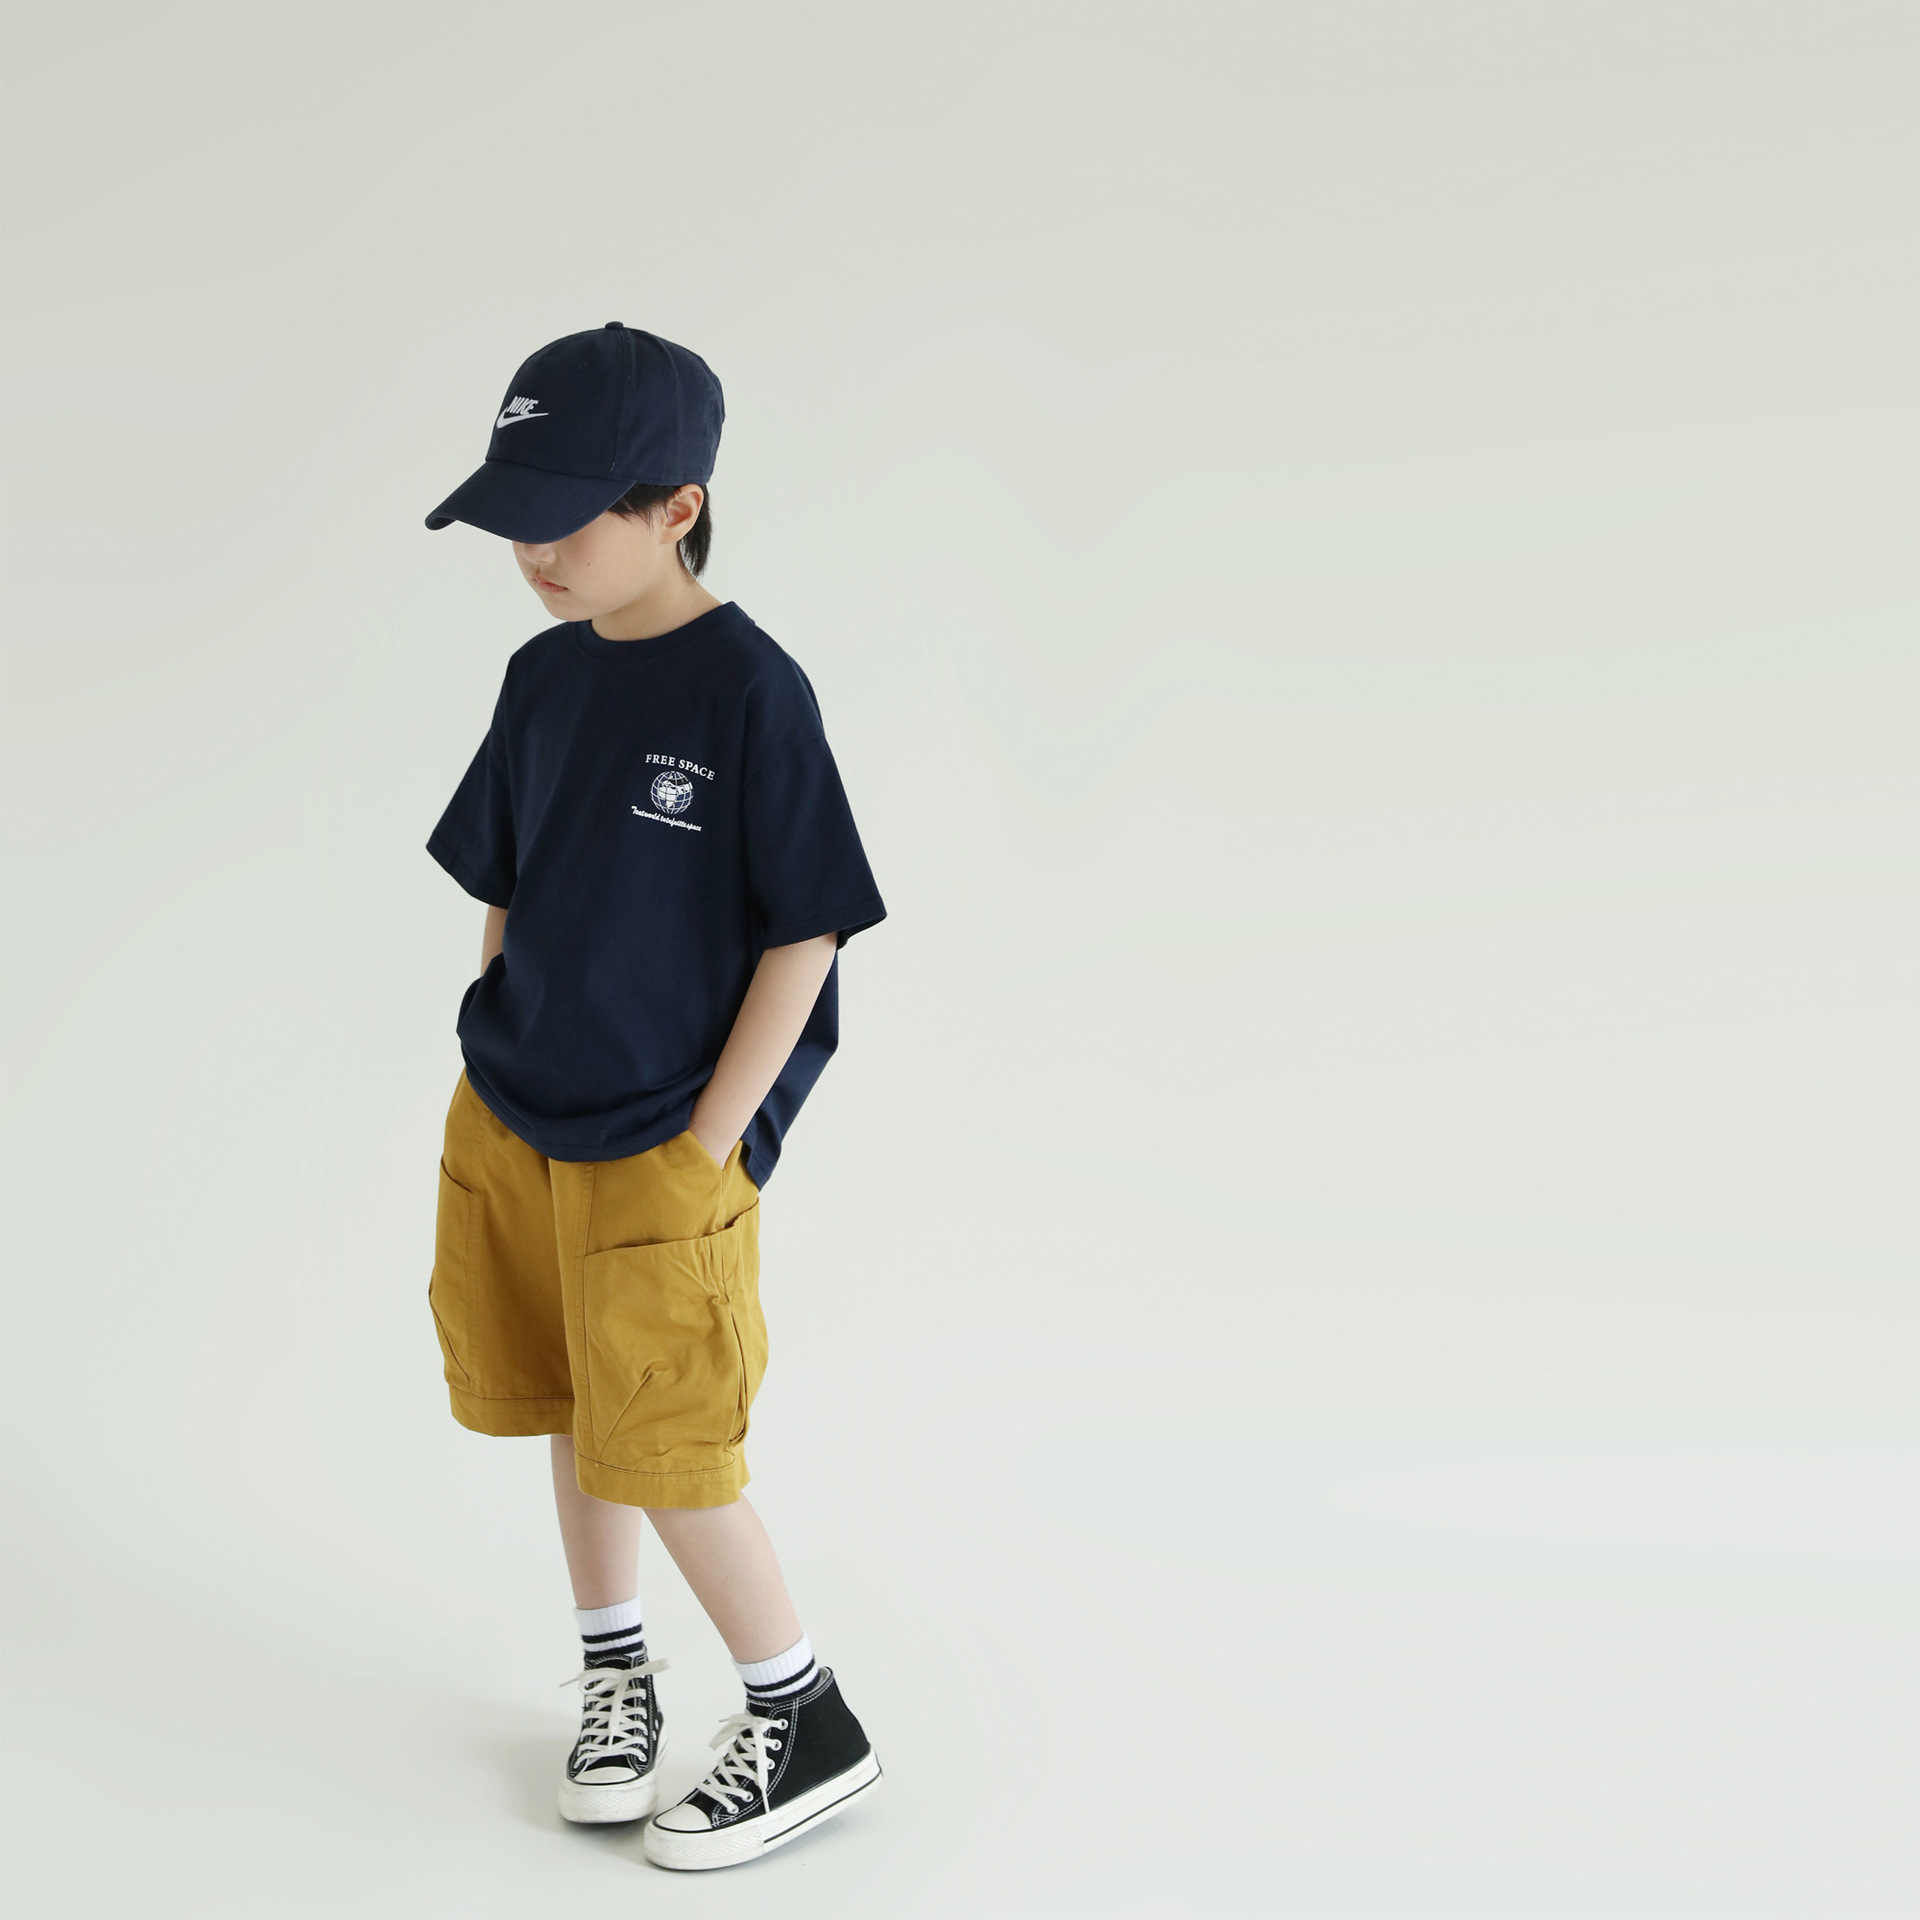 2023 Summer New Children's Fashionable Cartoon Printed Half Sleeve Tops Boys' Casual Loose Short Sleeves T-shirt Fashion